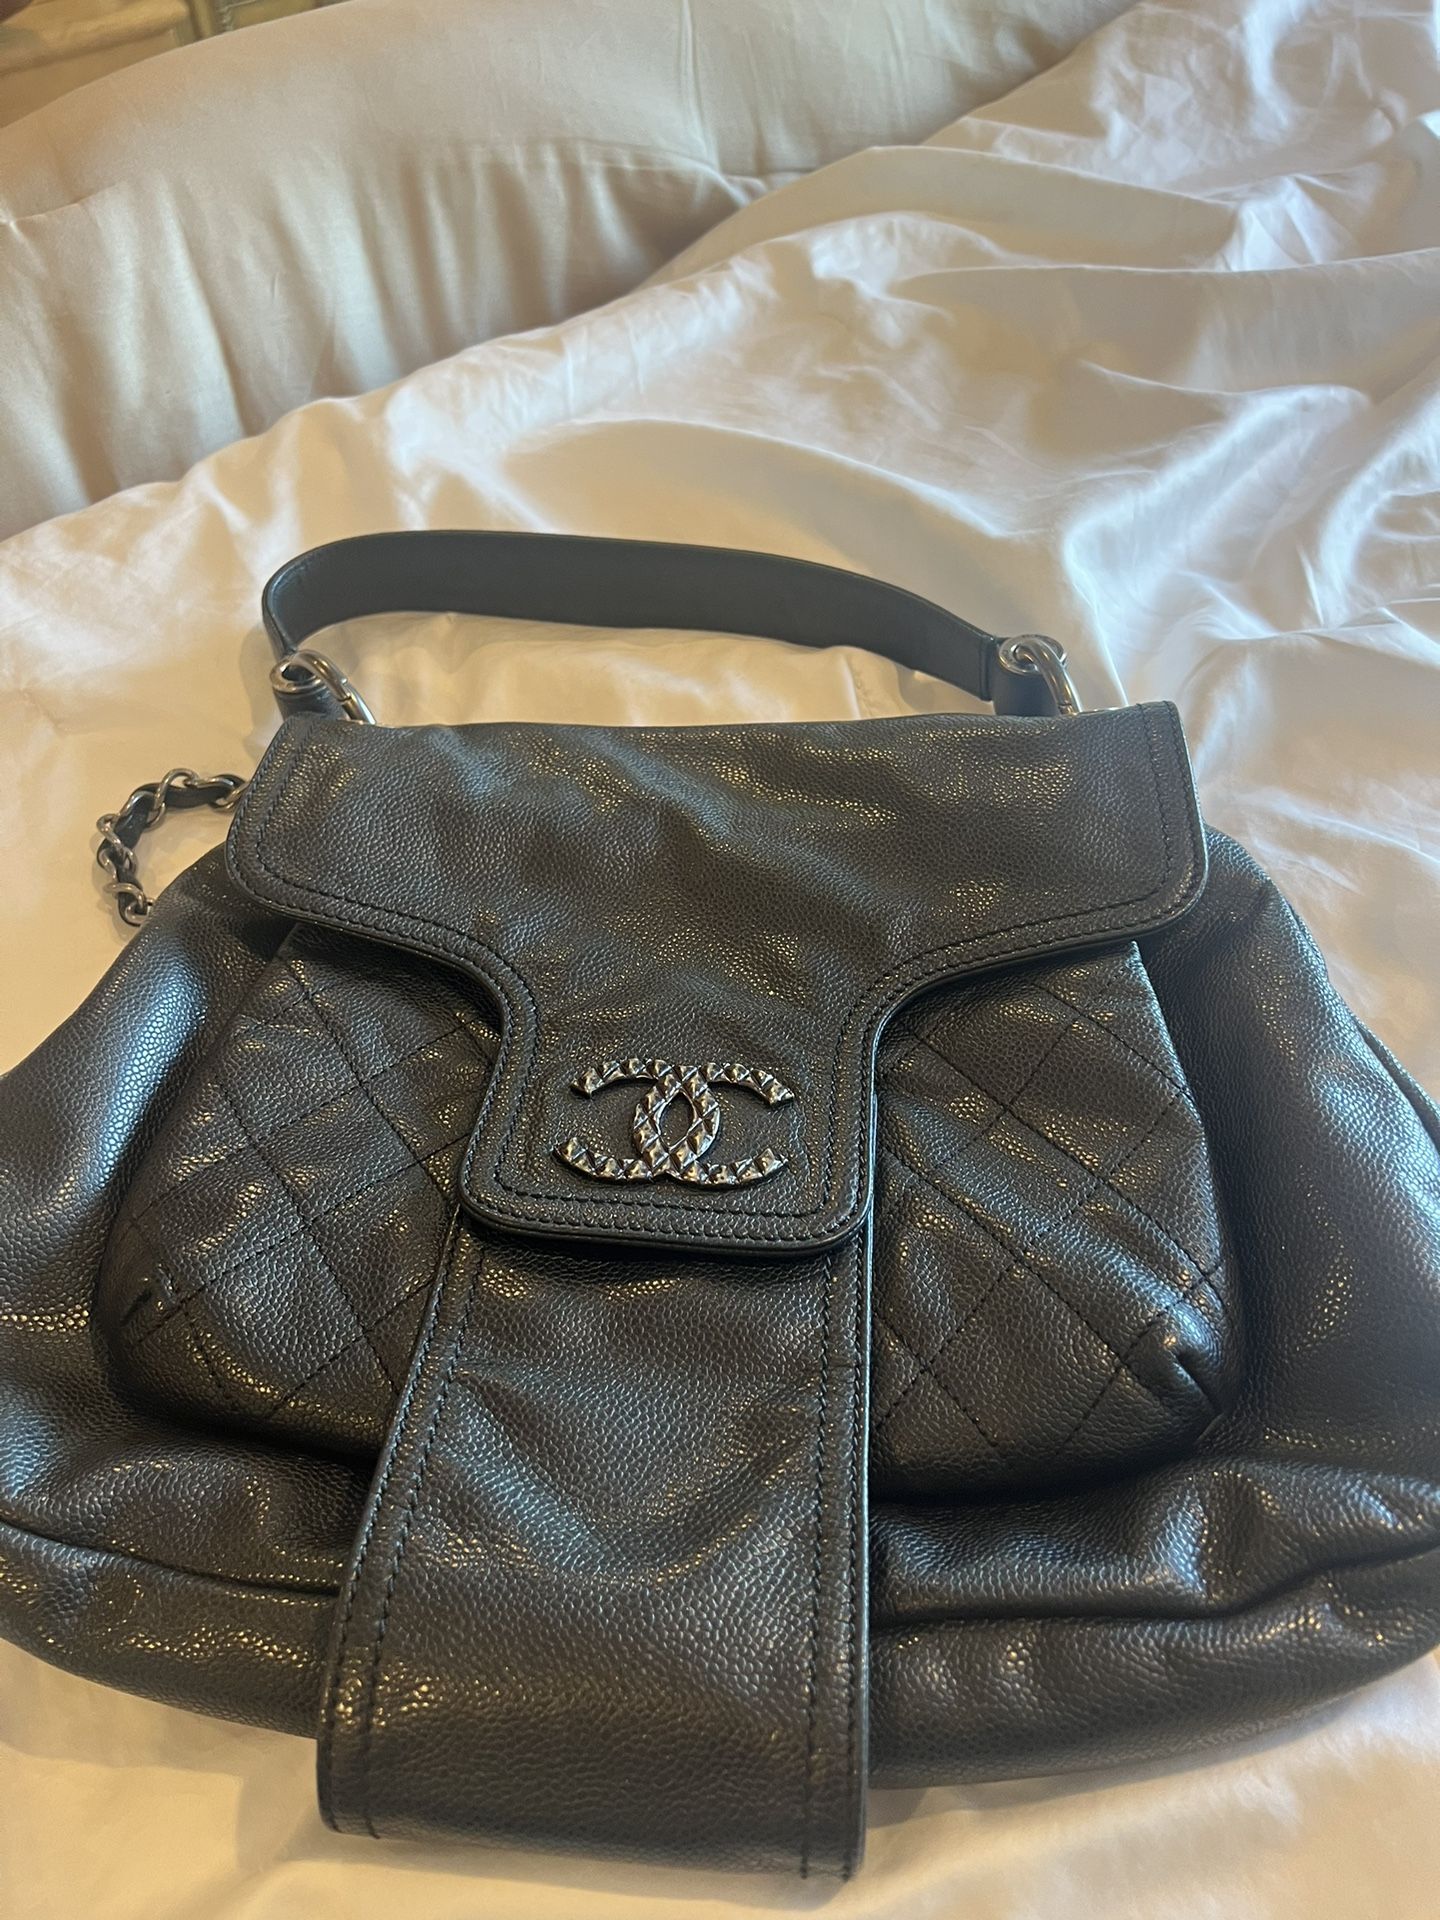 Authentic Chanel Handbag 